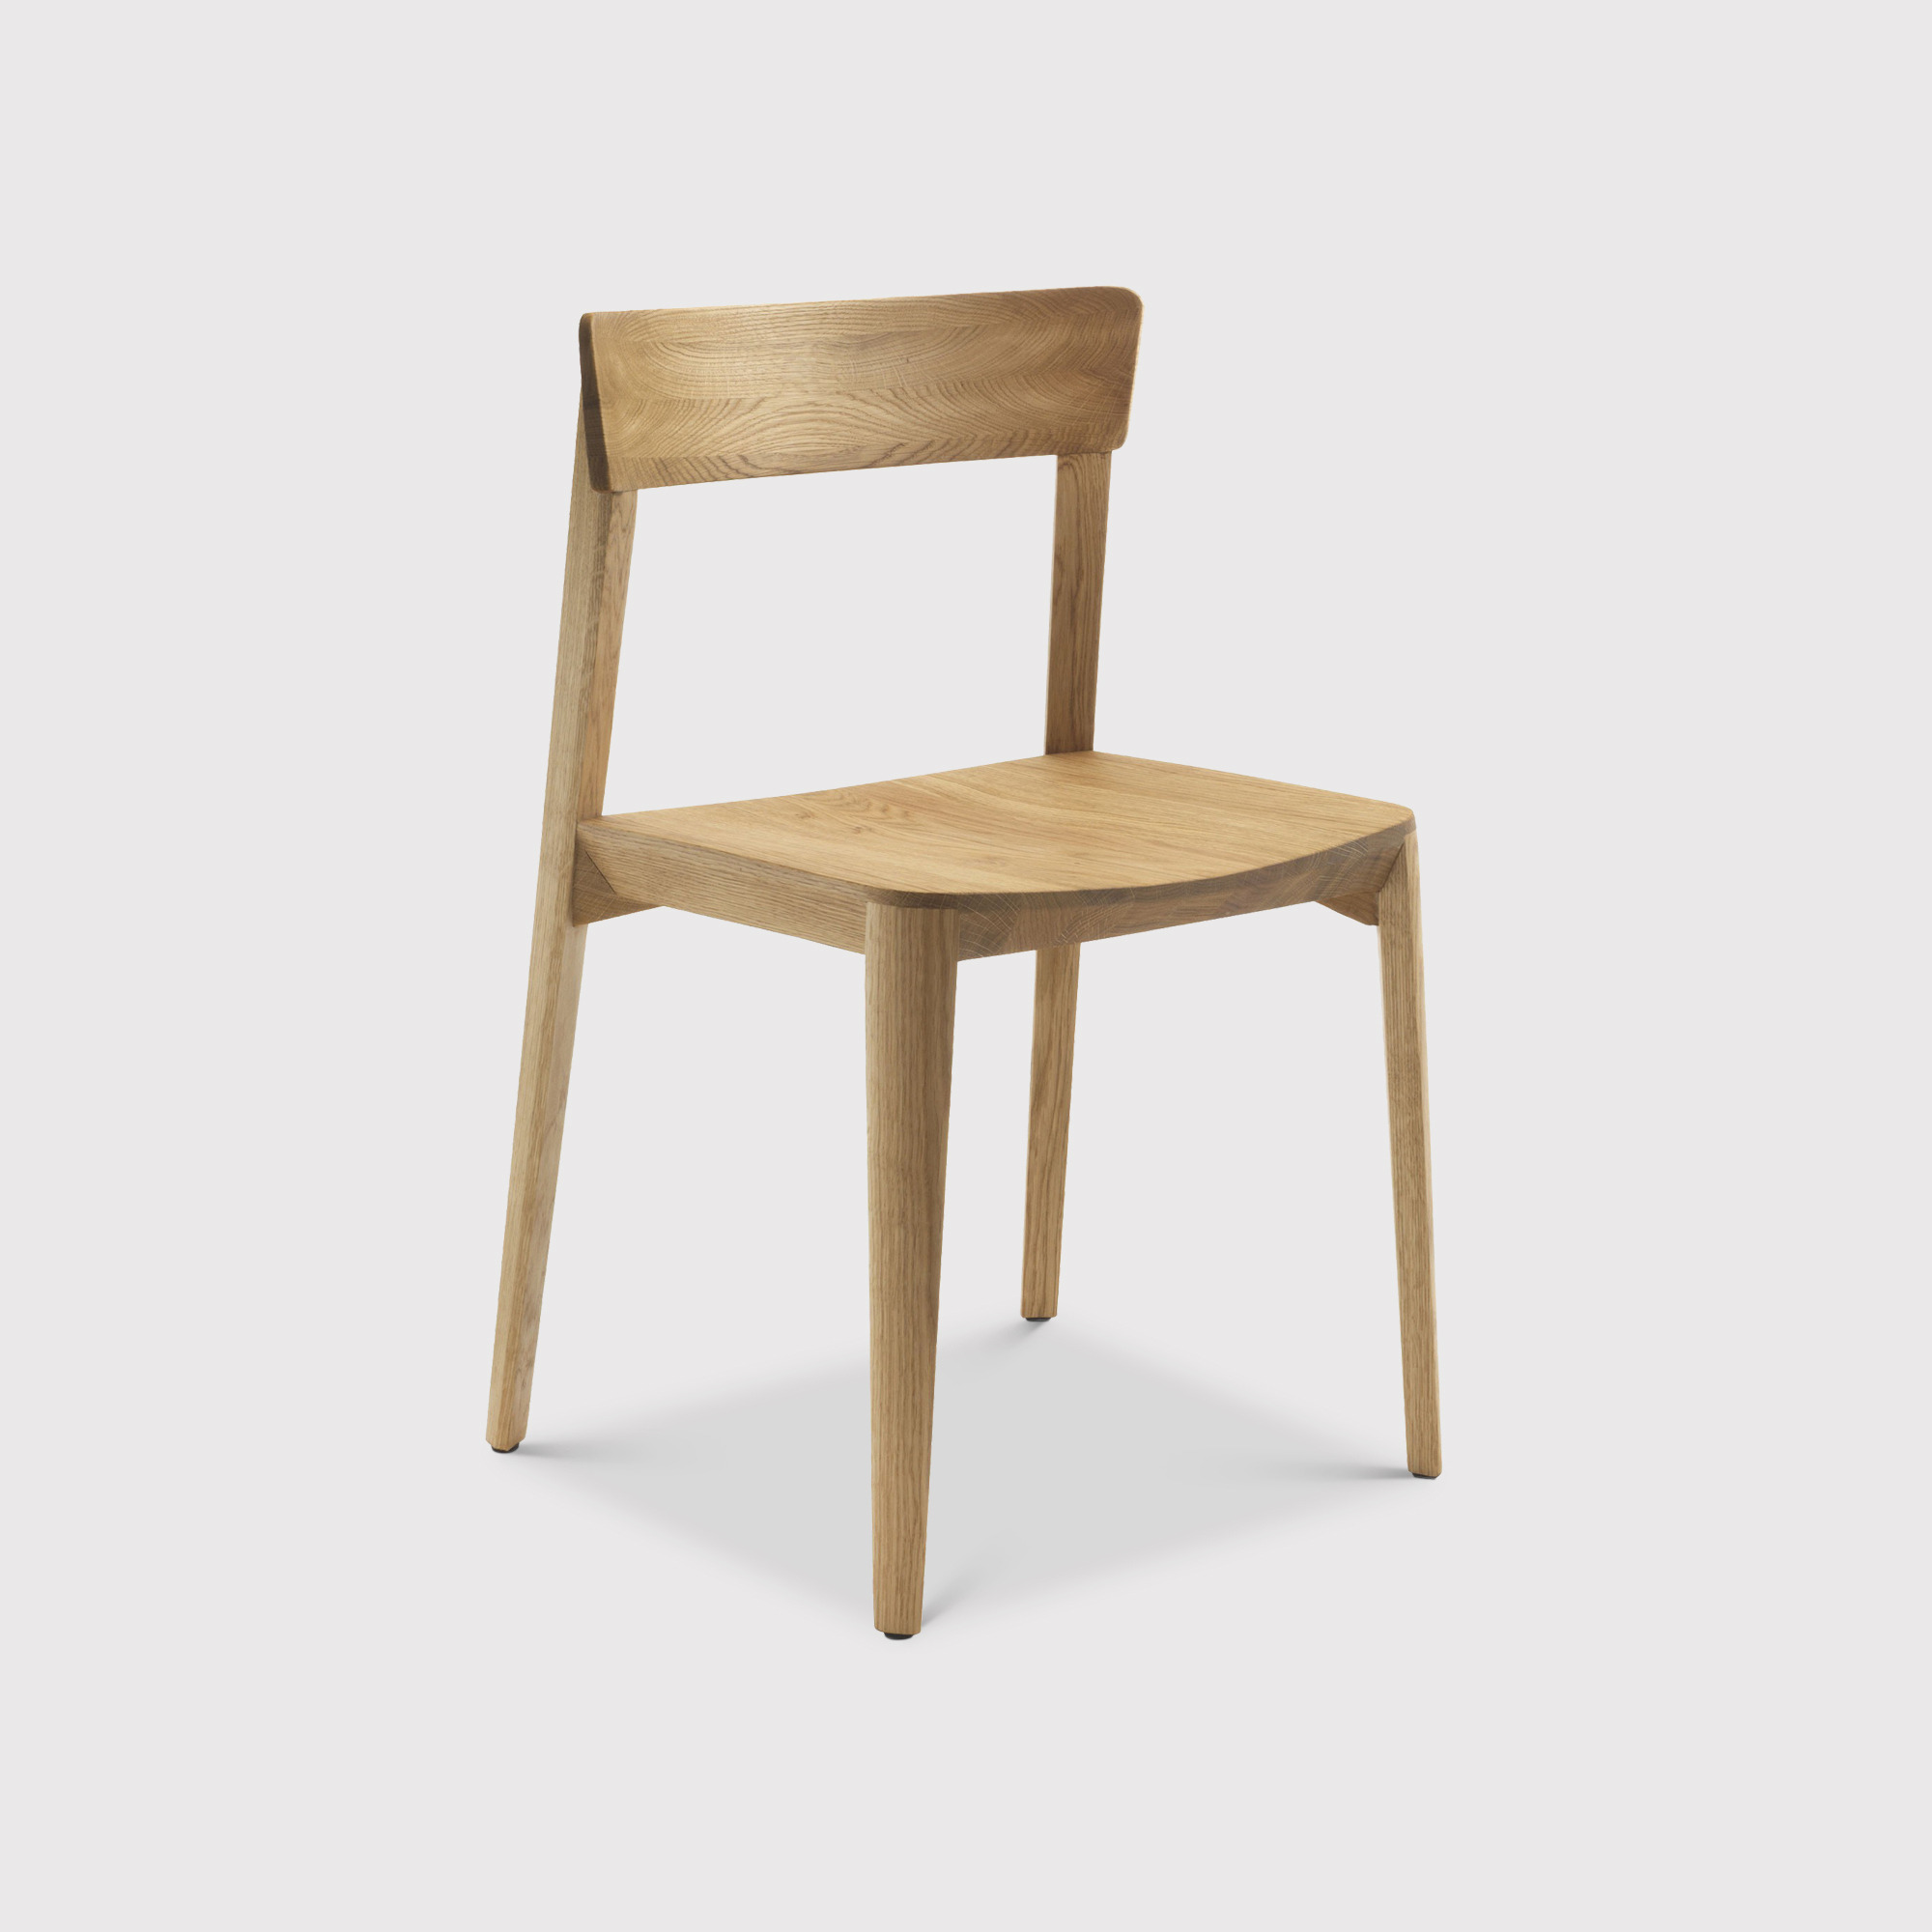 RIVA Mia Wood Dining Chair, Neutral Oak - Barker & Stonehouse - image 1